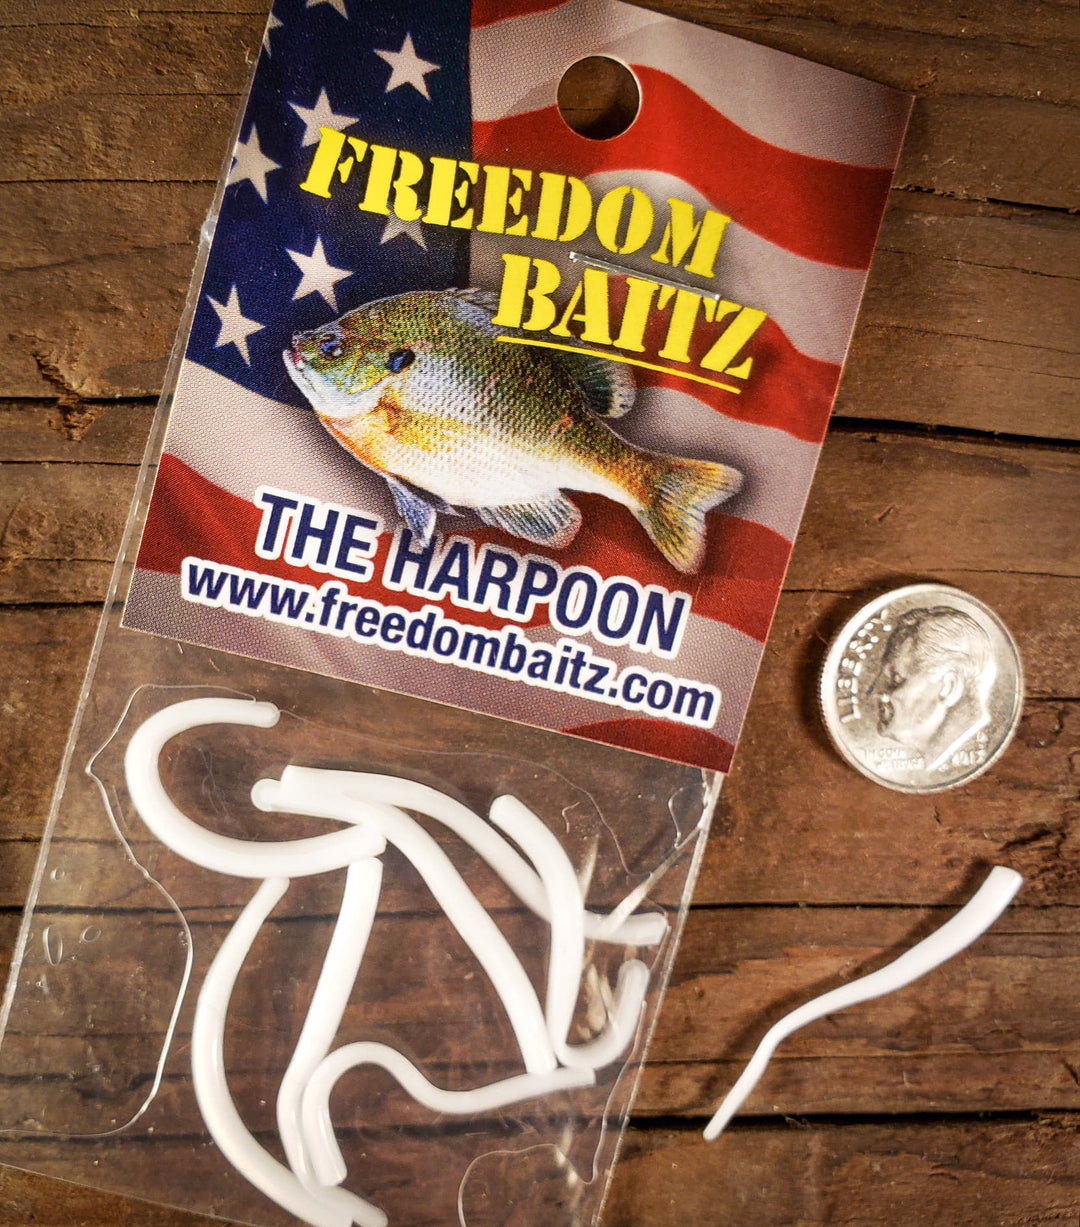 Freedom Baitz - Pink harpoon was the ticket this weekend!